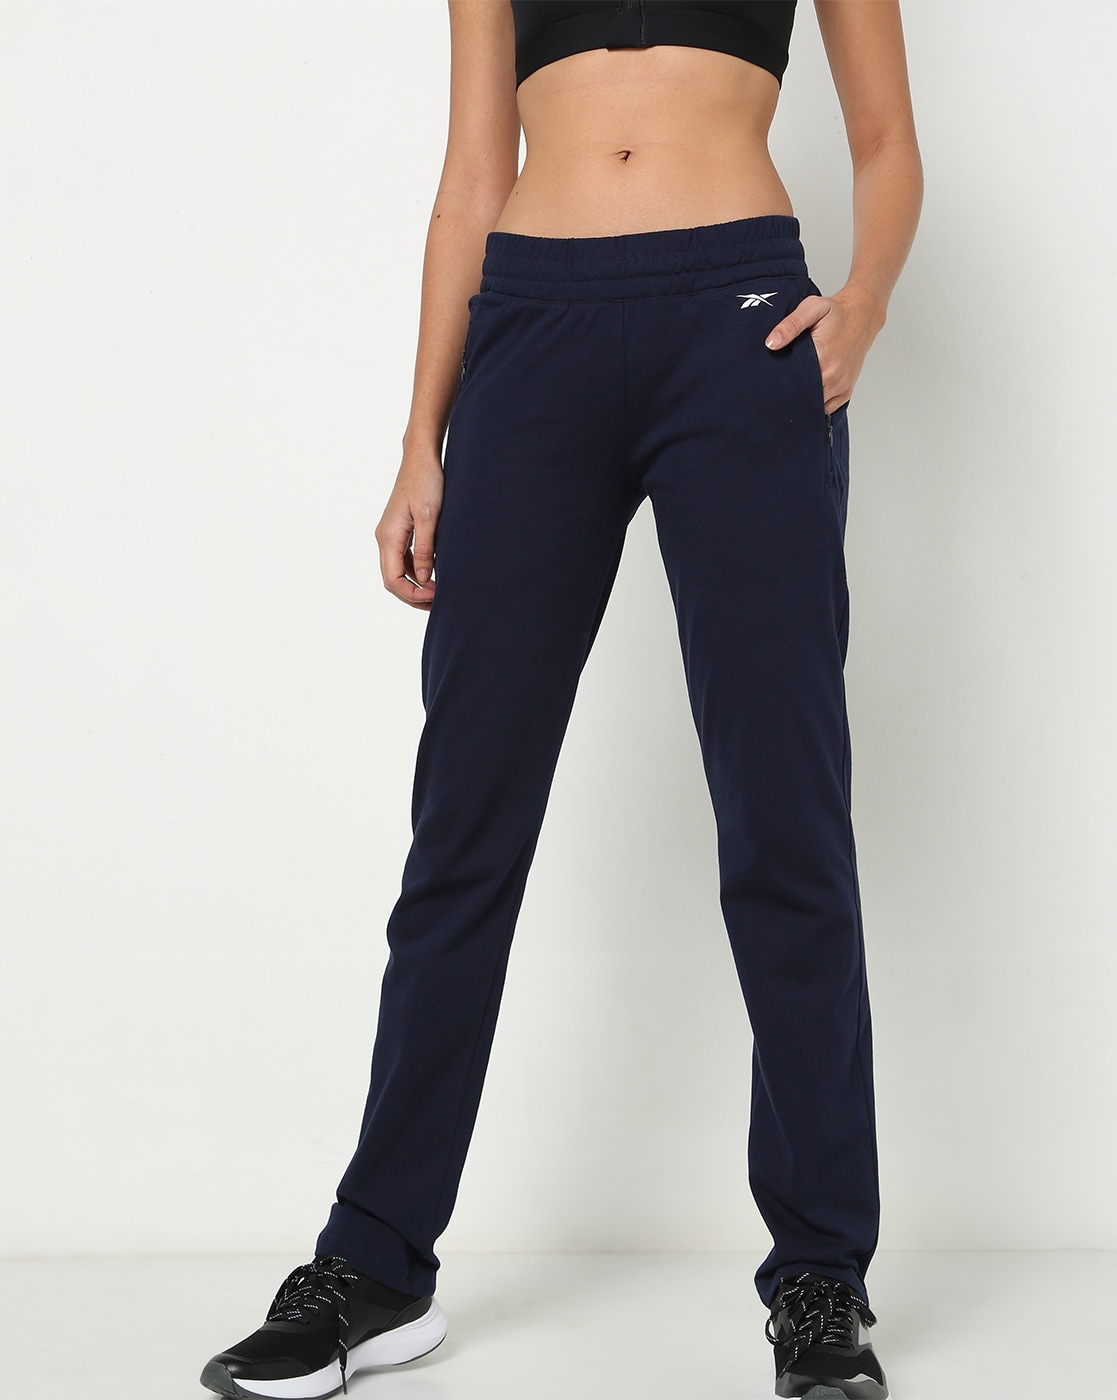 Women s Adidas Originals Firebird Track Pants H35518 x9 Option 1 15 95